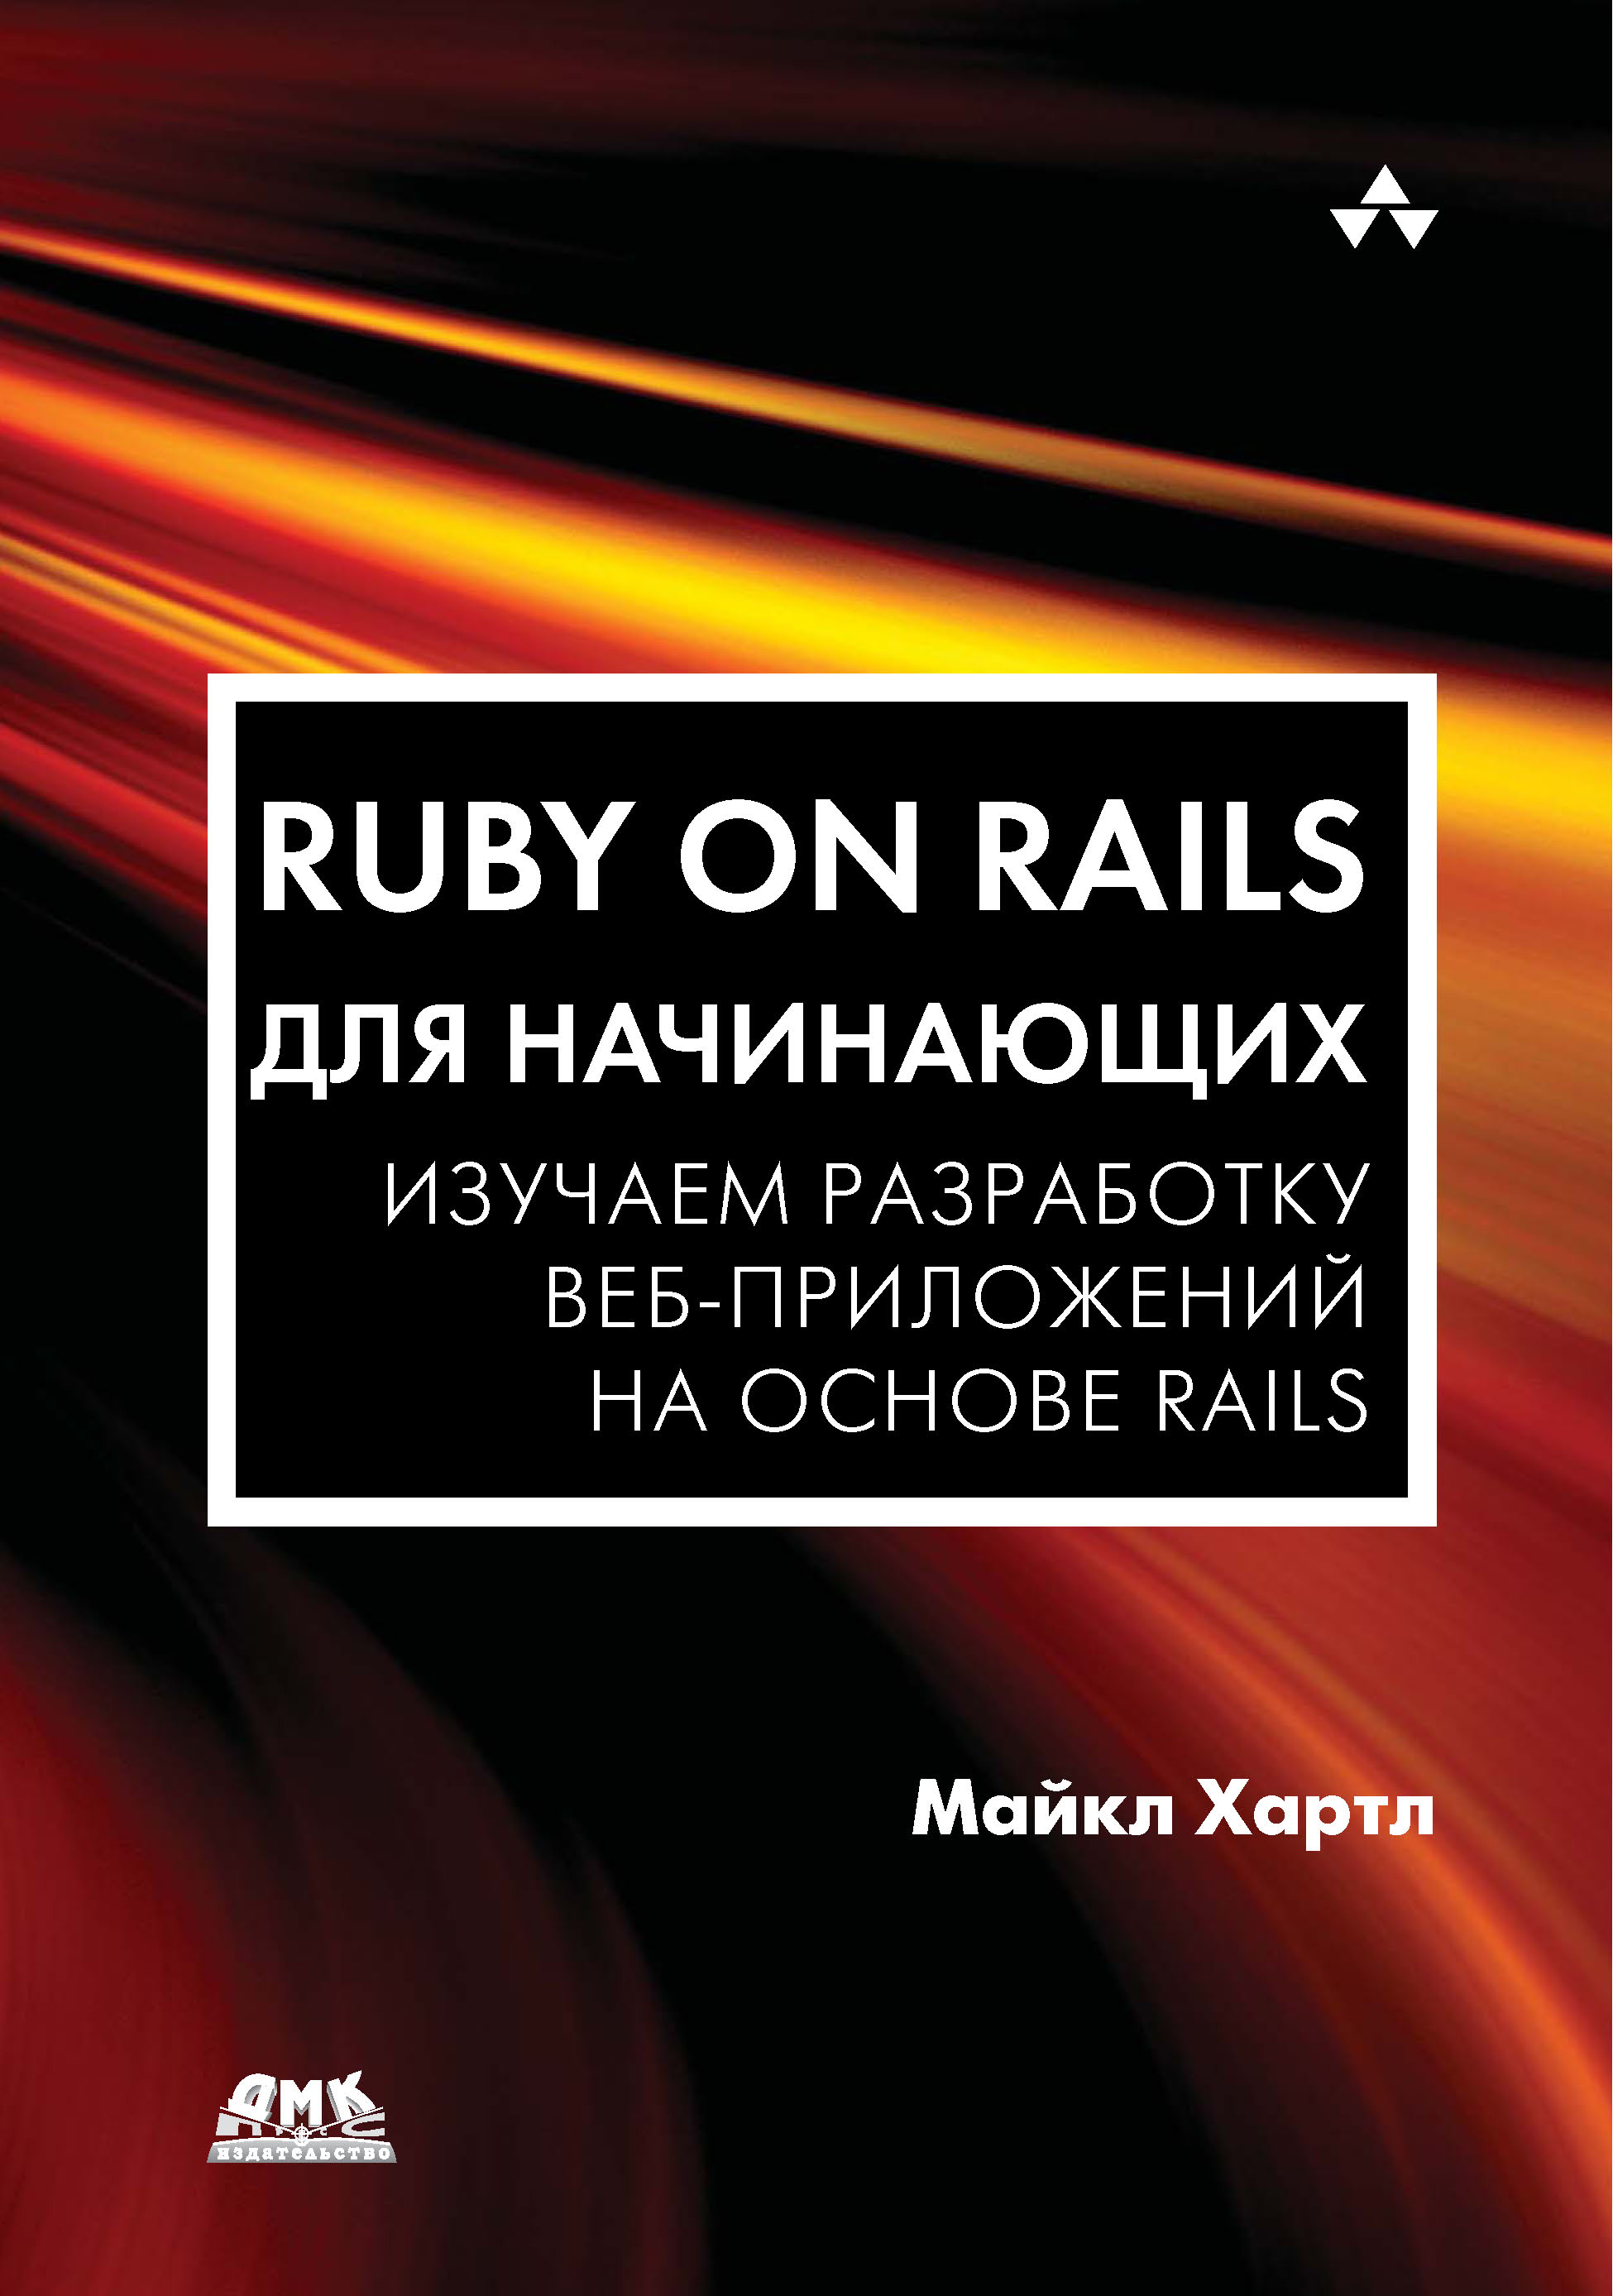 Ruby on Railsдля начинающих. Изучаем разработку веб-приложений на основе Rails